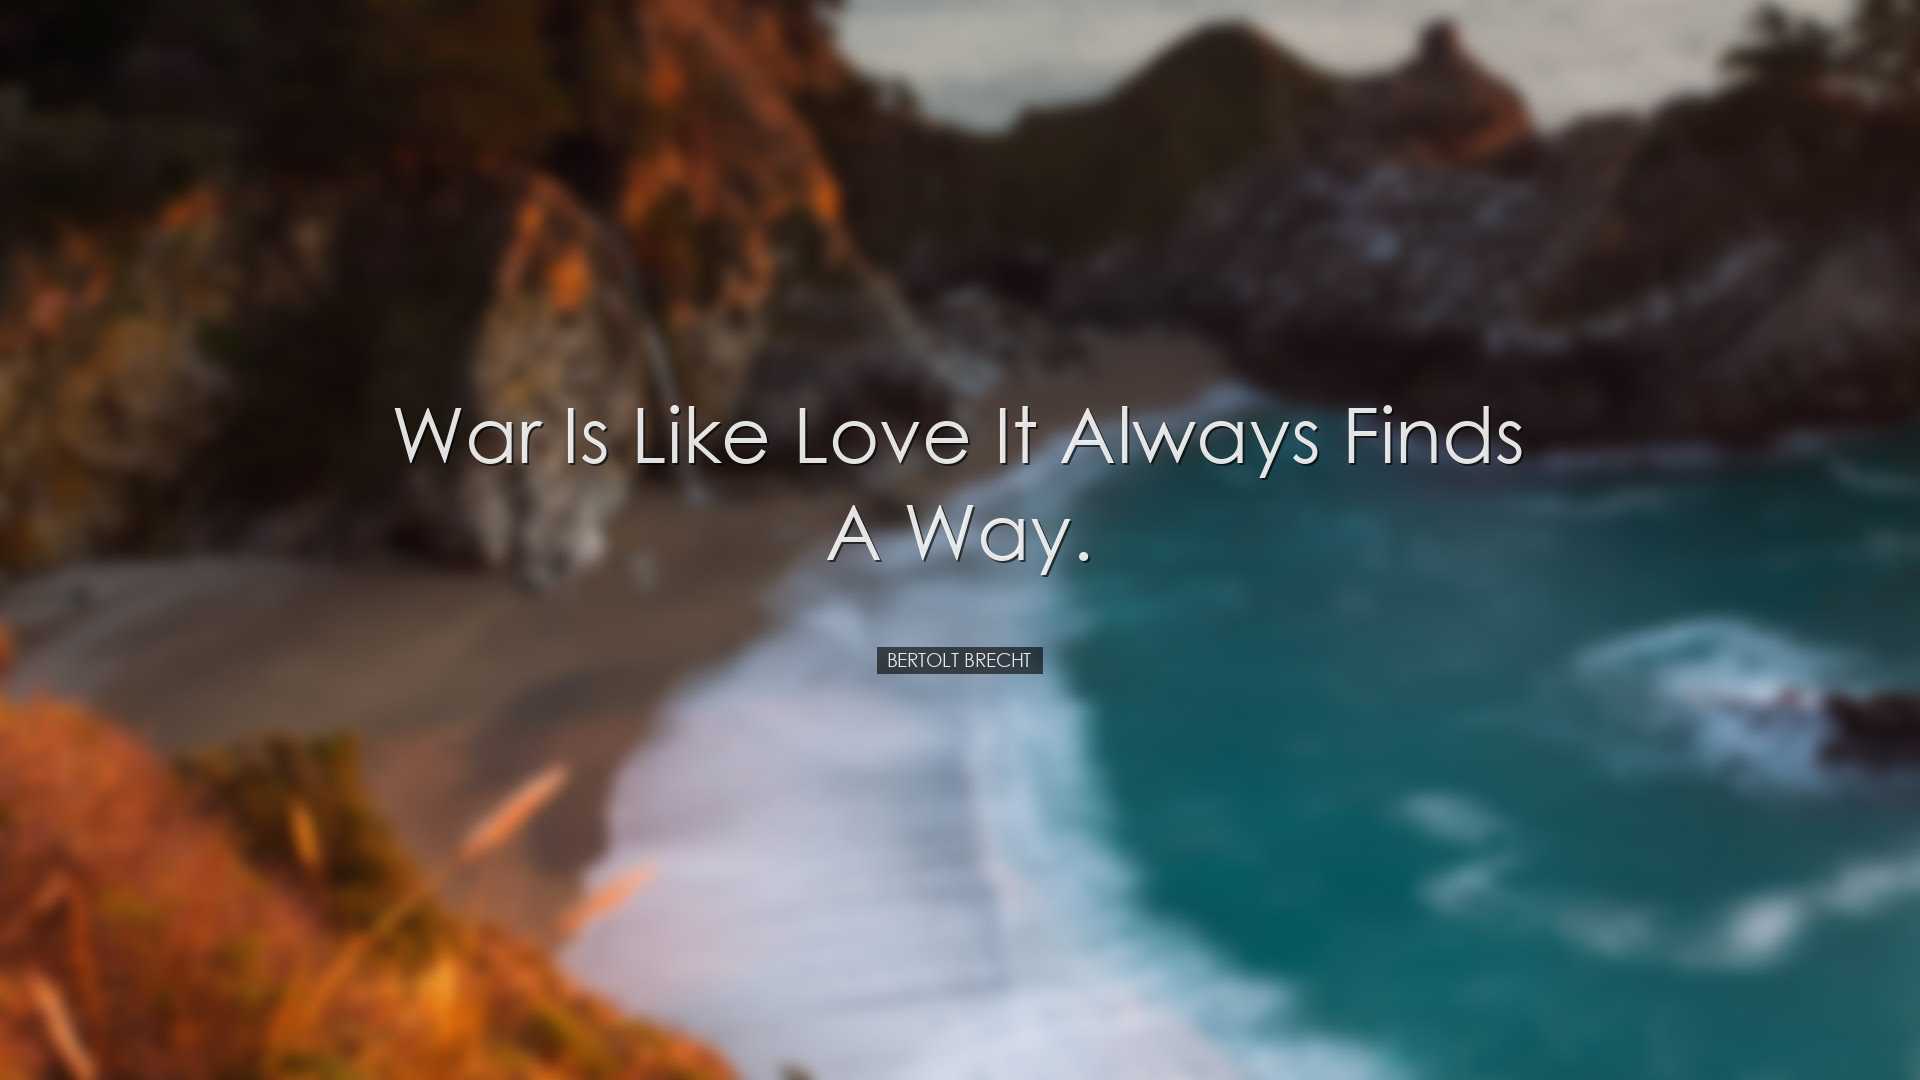 War is like love it always finds a way. - Bertolt Brecht